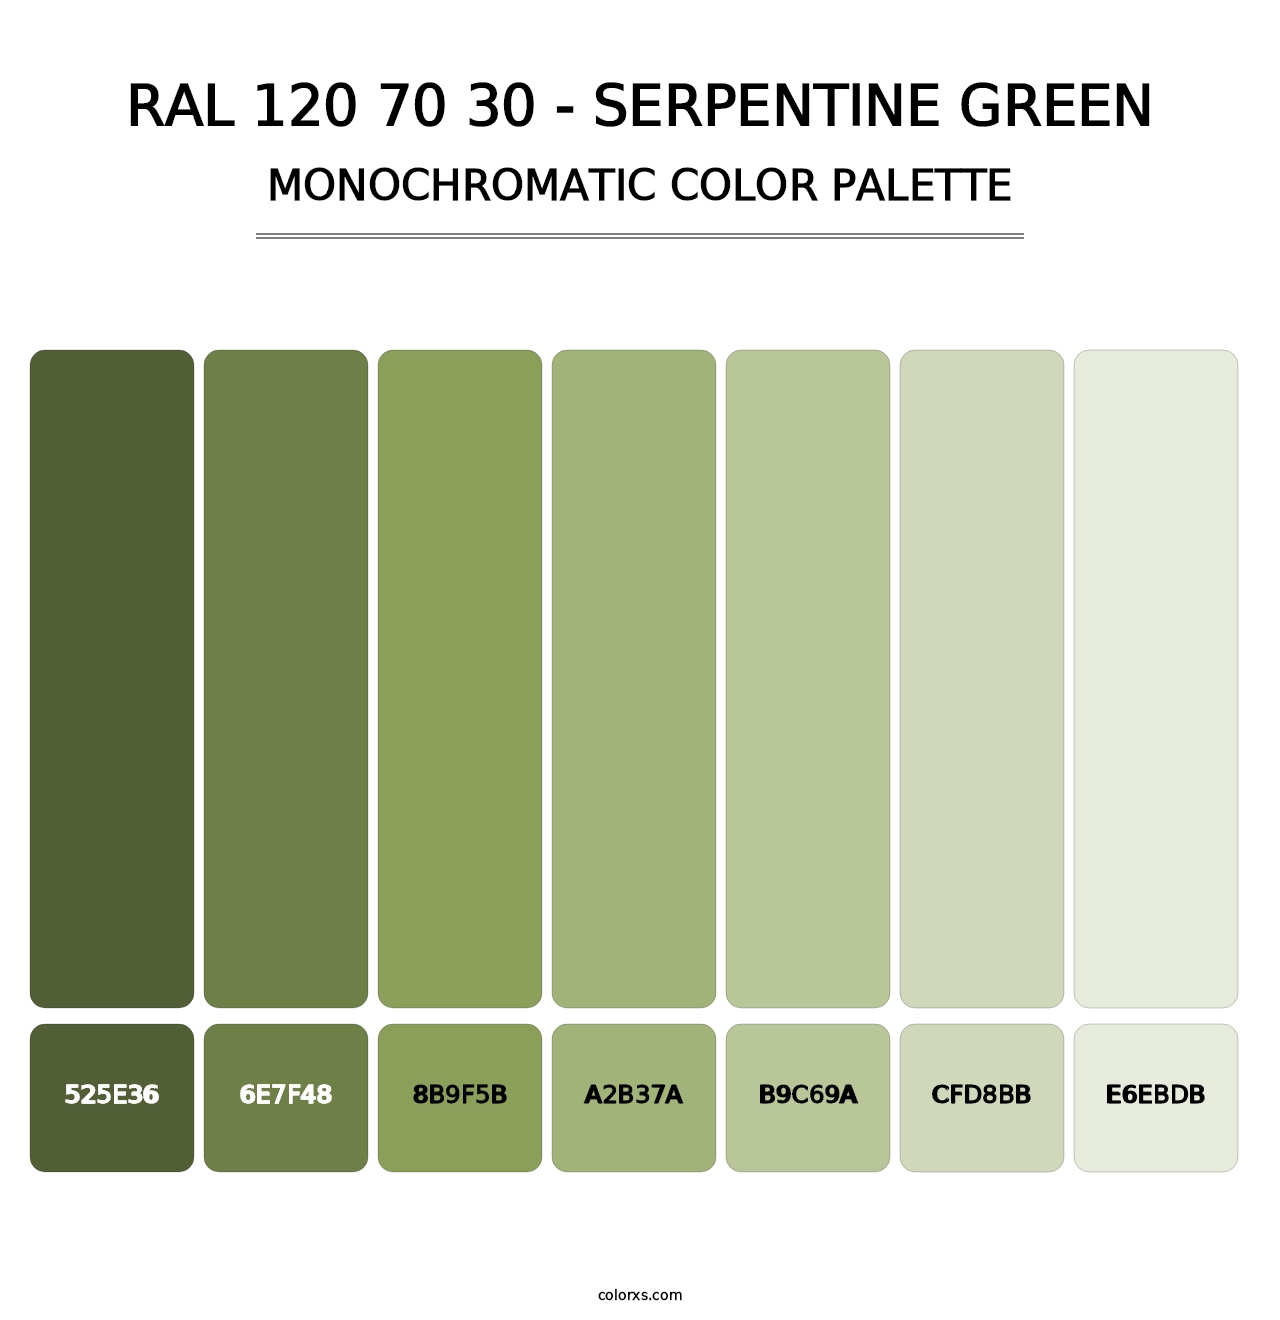 RAL 120 70 30 - Serpentine Green - Monochromatic Color Palette